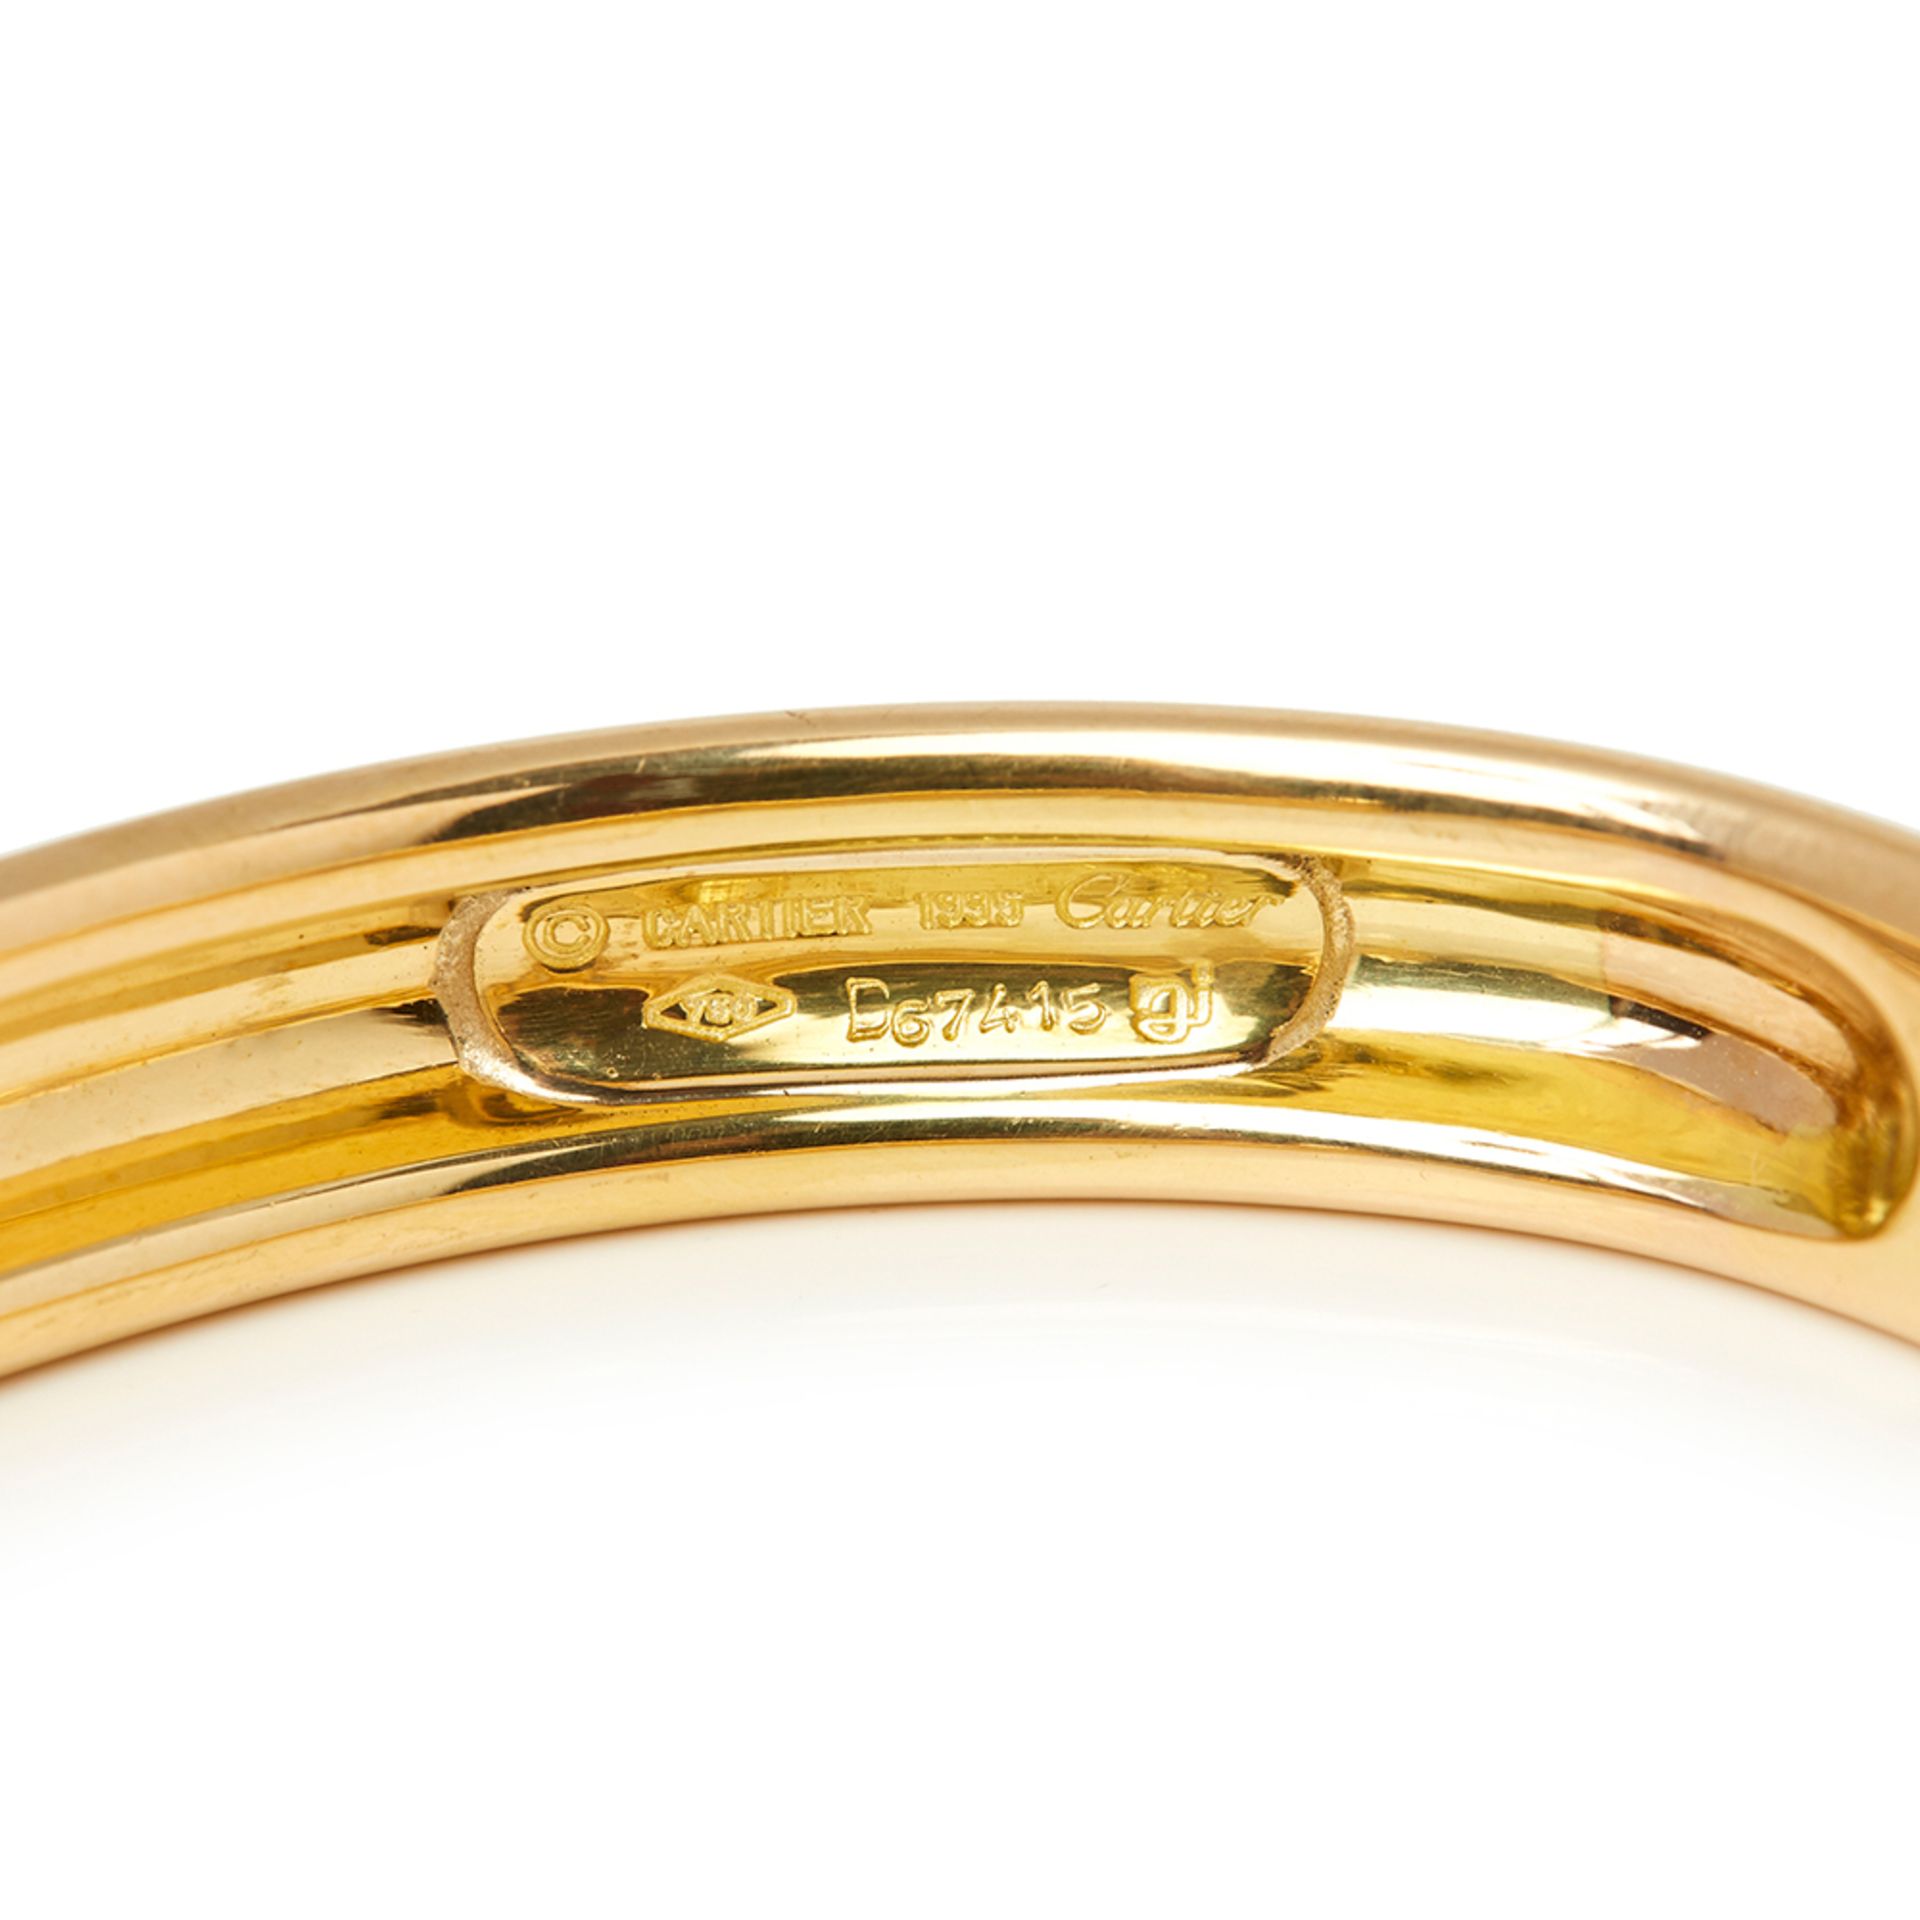 Cartier 18k Yellow Gold Sapphire & Diamond Cuff Bracelet - Image 6 of 7